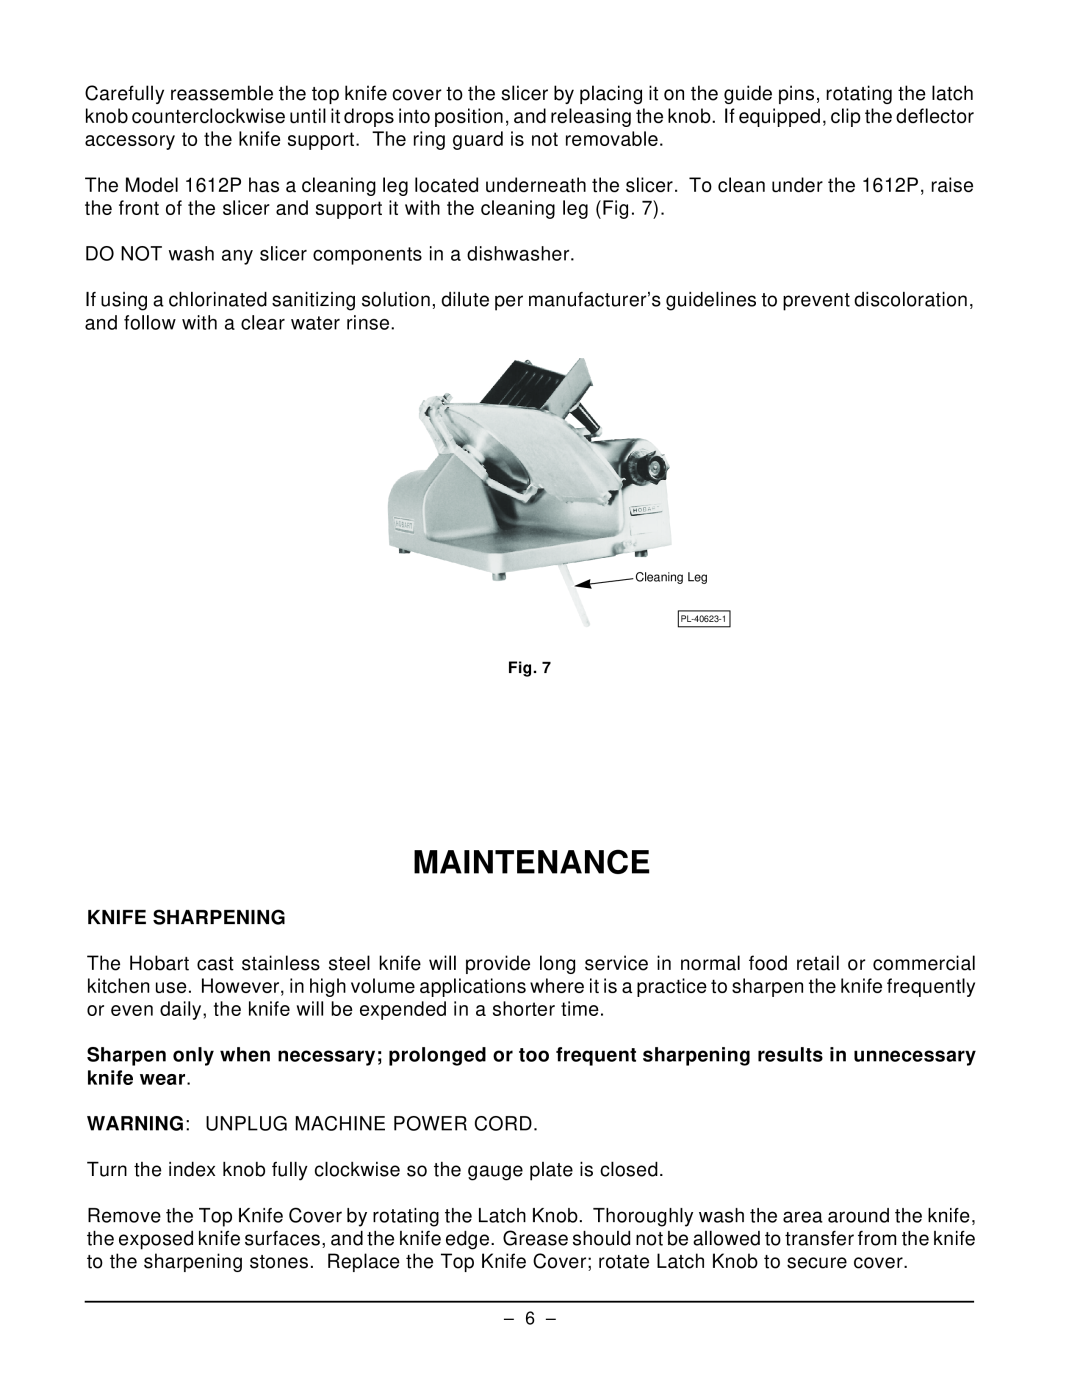 Hobart 1612P manual Maintenance, Knife Sharpening 